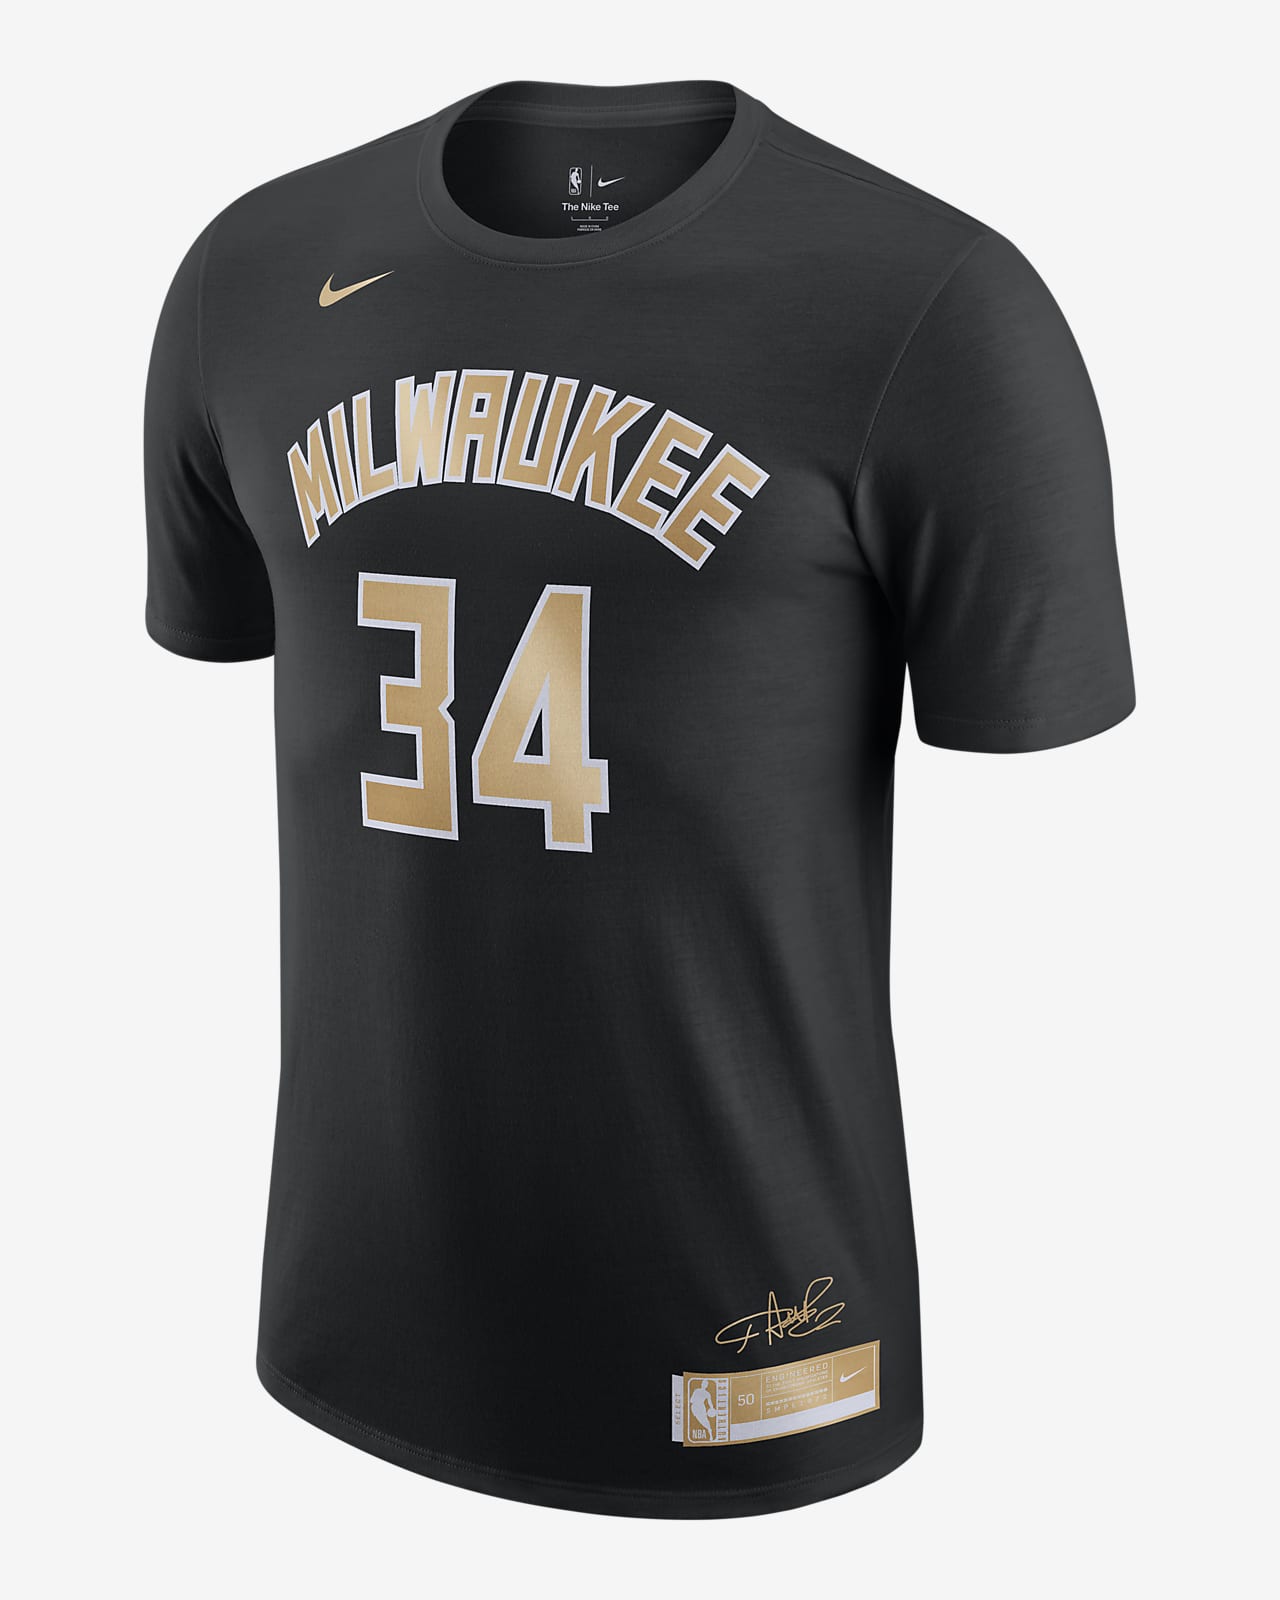 Giannis Antetokounmpo Select Series Men's Nike NBA T-Shirt